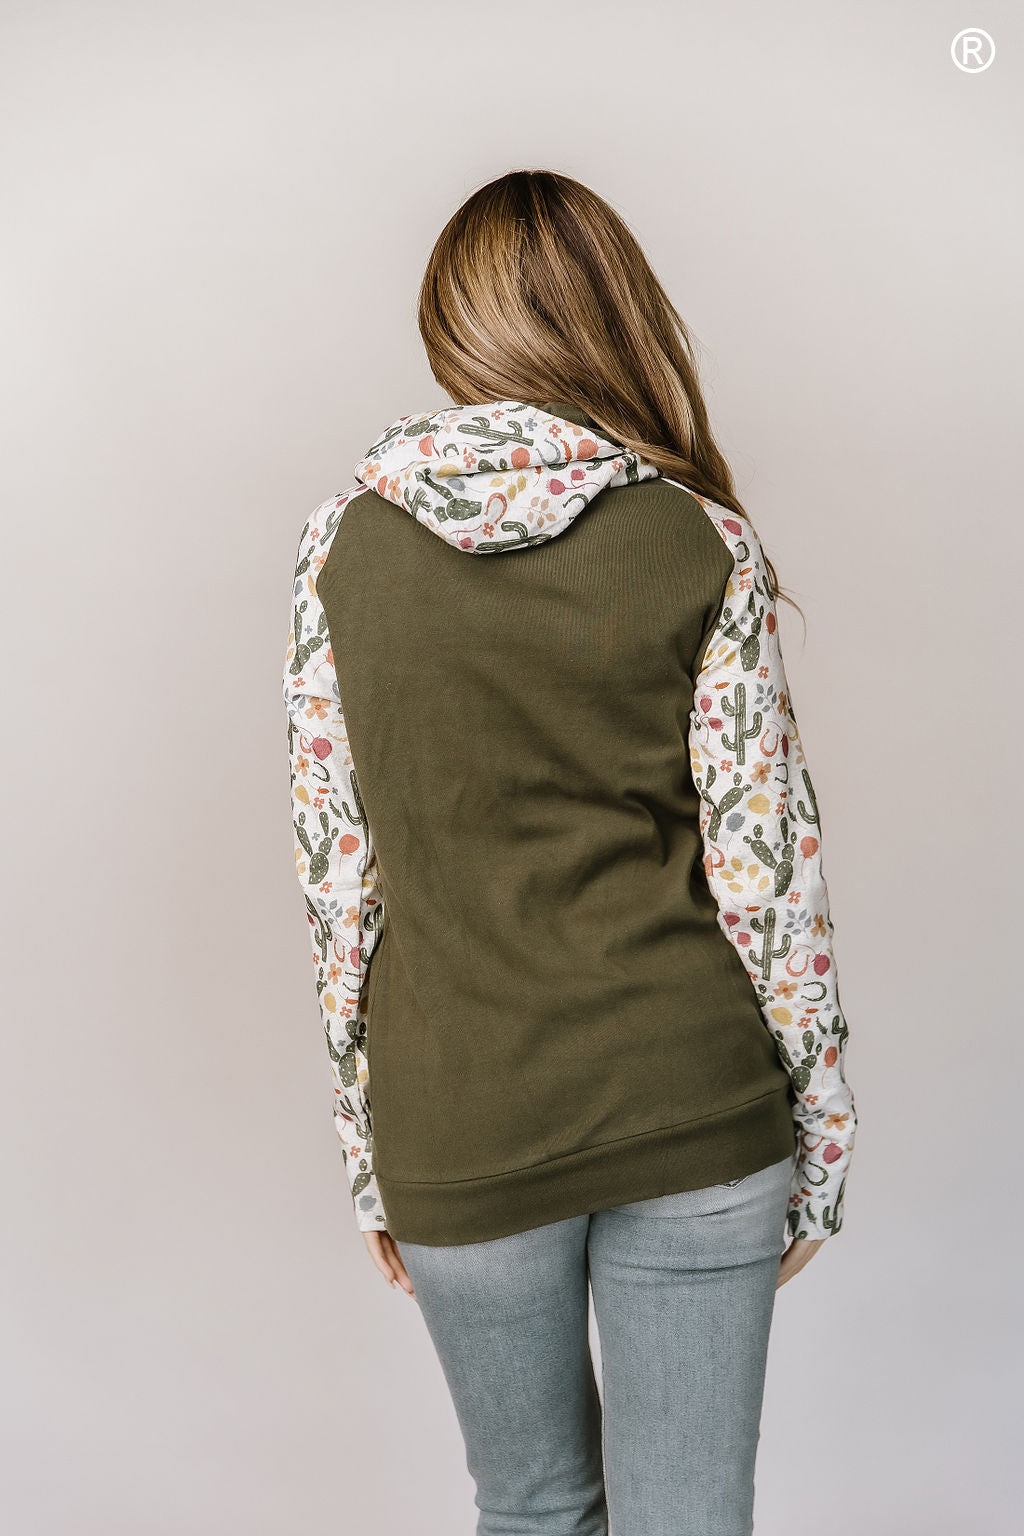 Ampersand Avenue - Doublehood™ Sweatshirt - Cactus Blossom